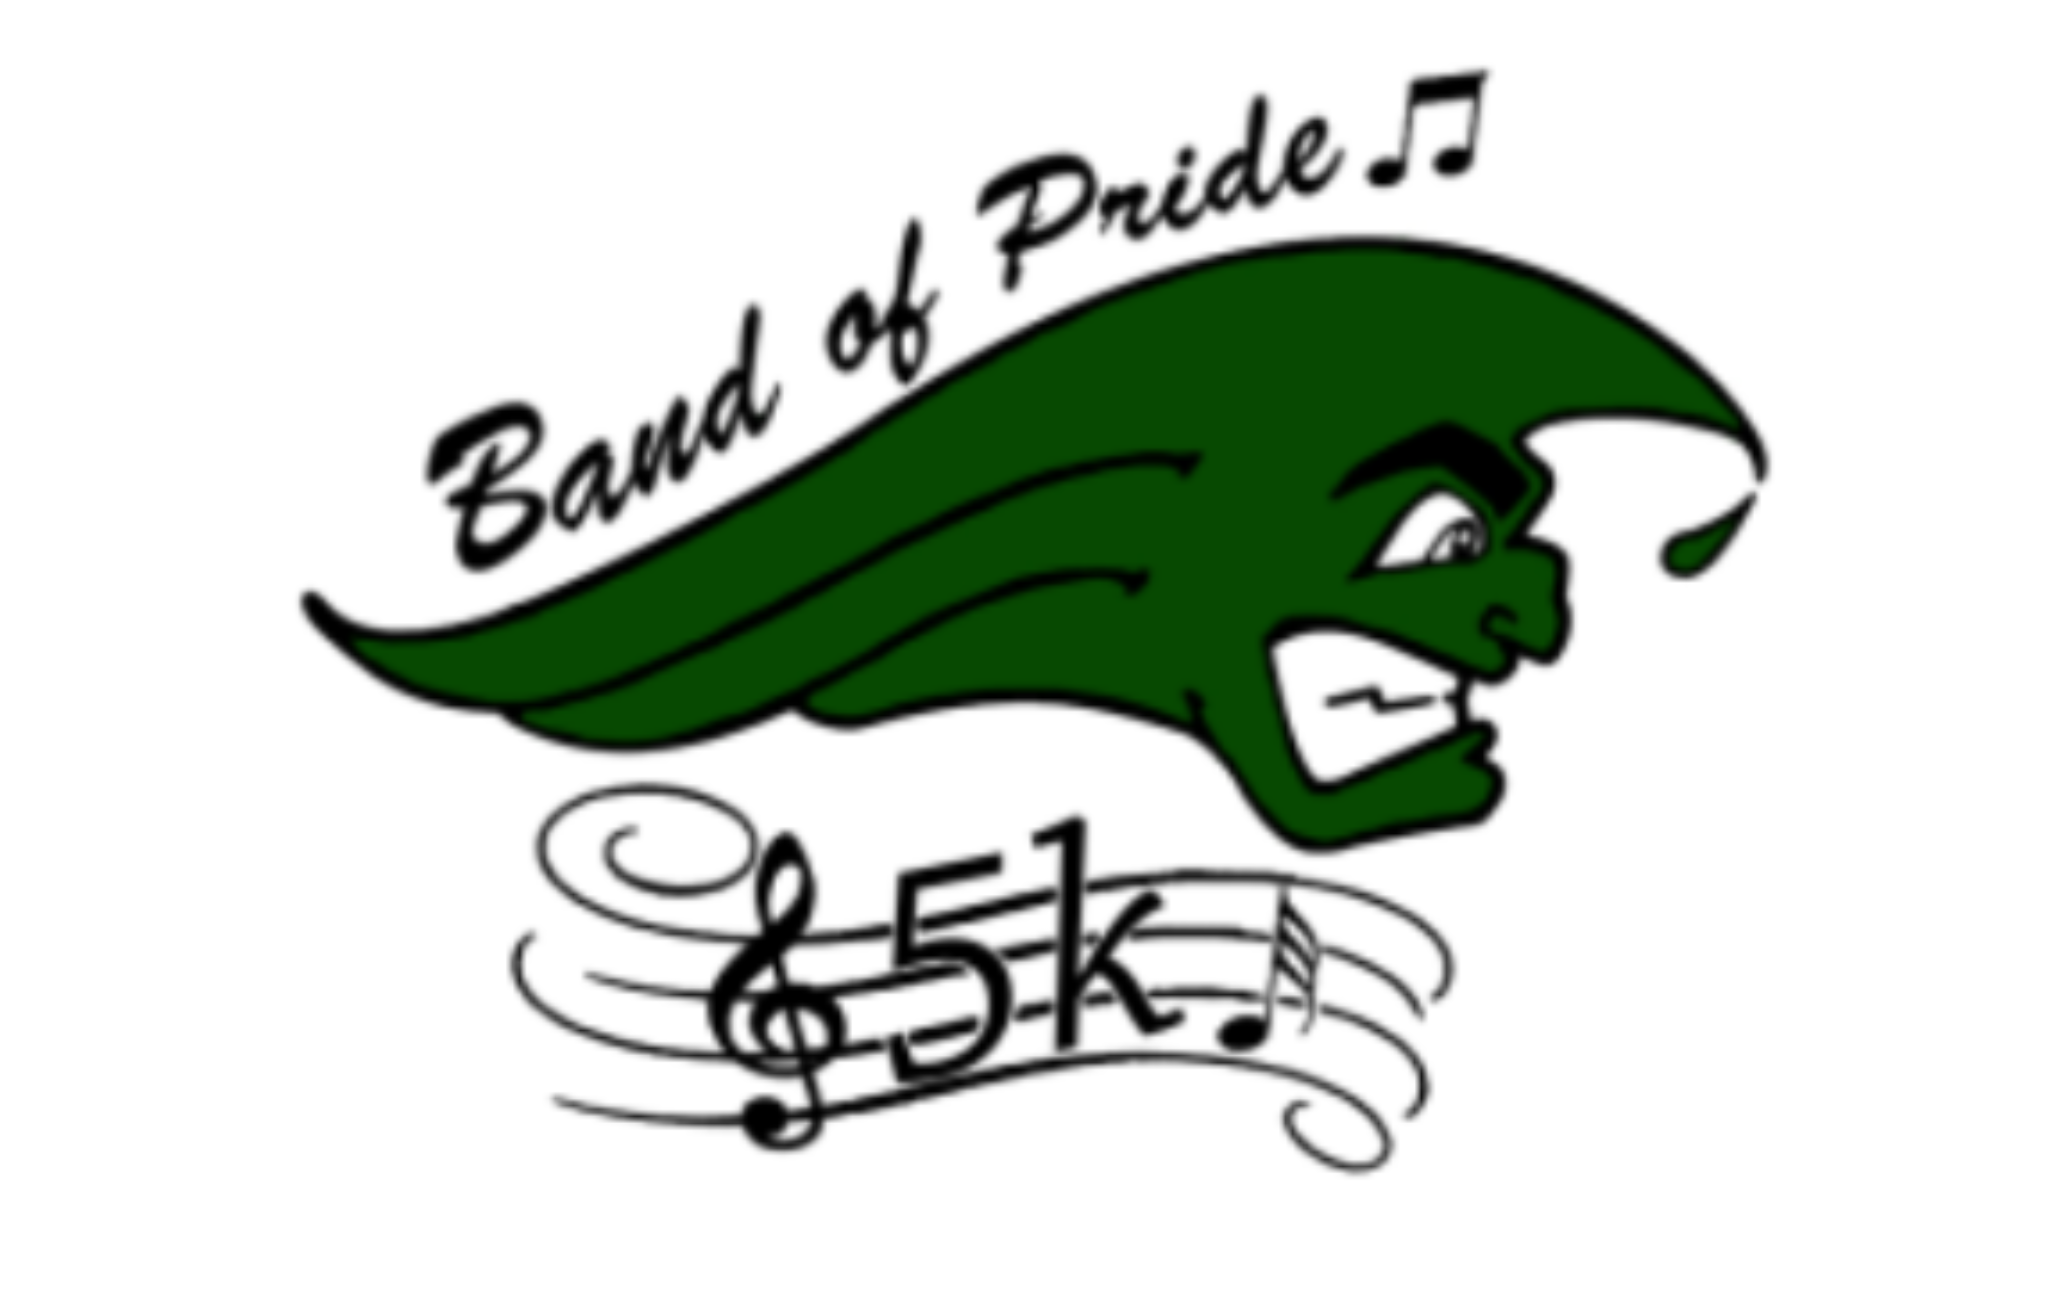 Band of Pride 5K logo on RaceRaves